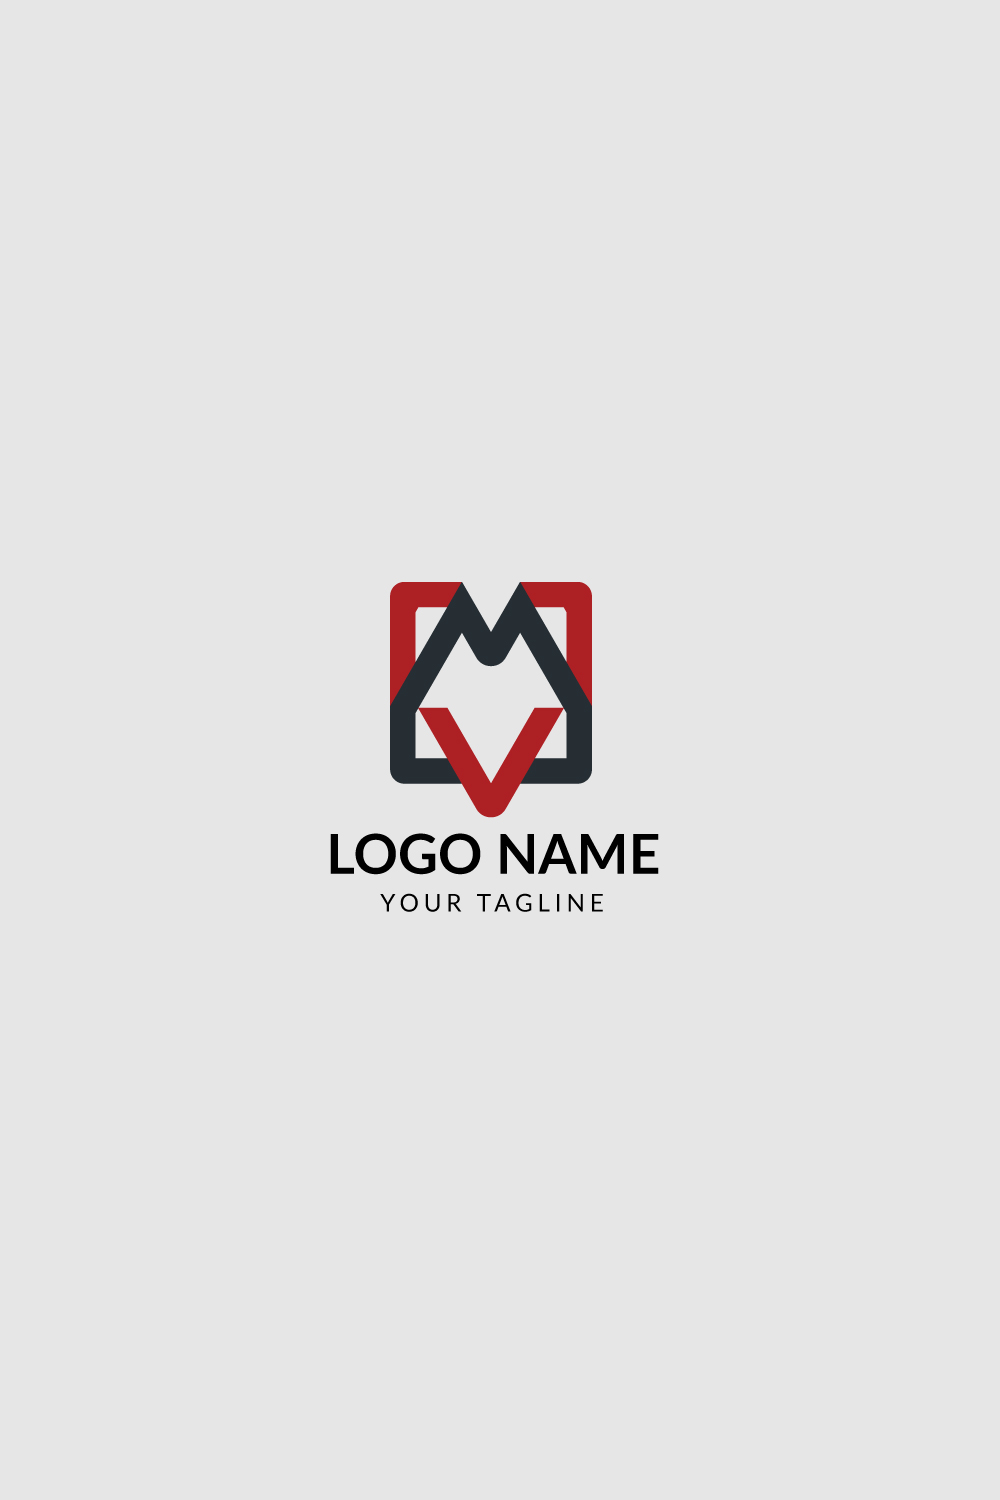 M letter logo design pinterest preview image.